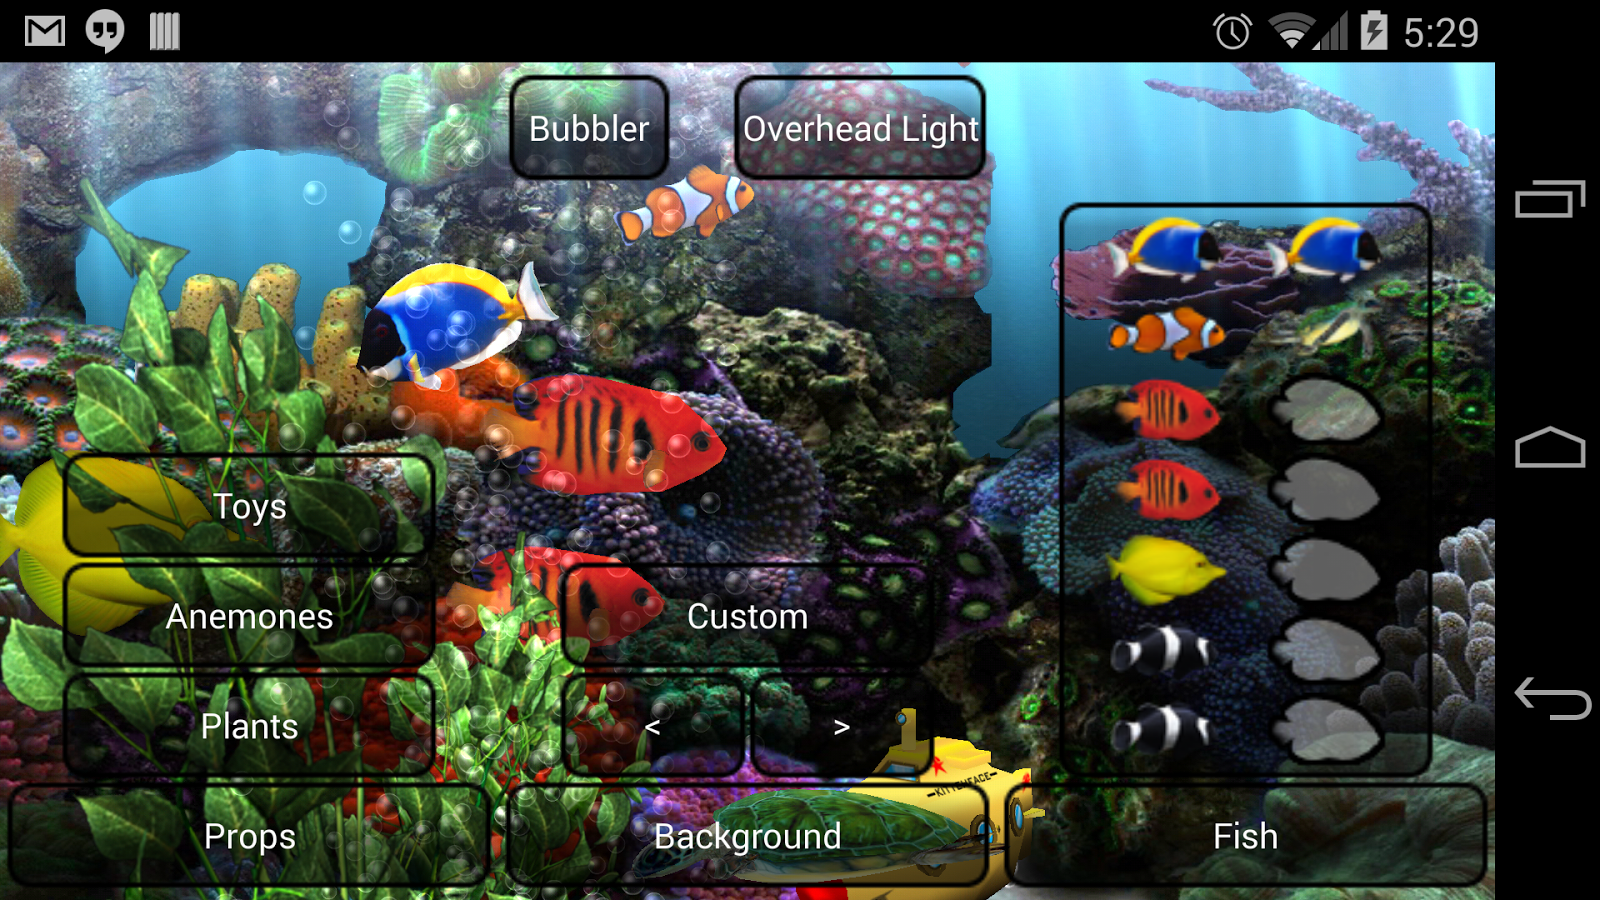 Aquarium Live Wallpaper   Android Apps on Google Play 1600x900